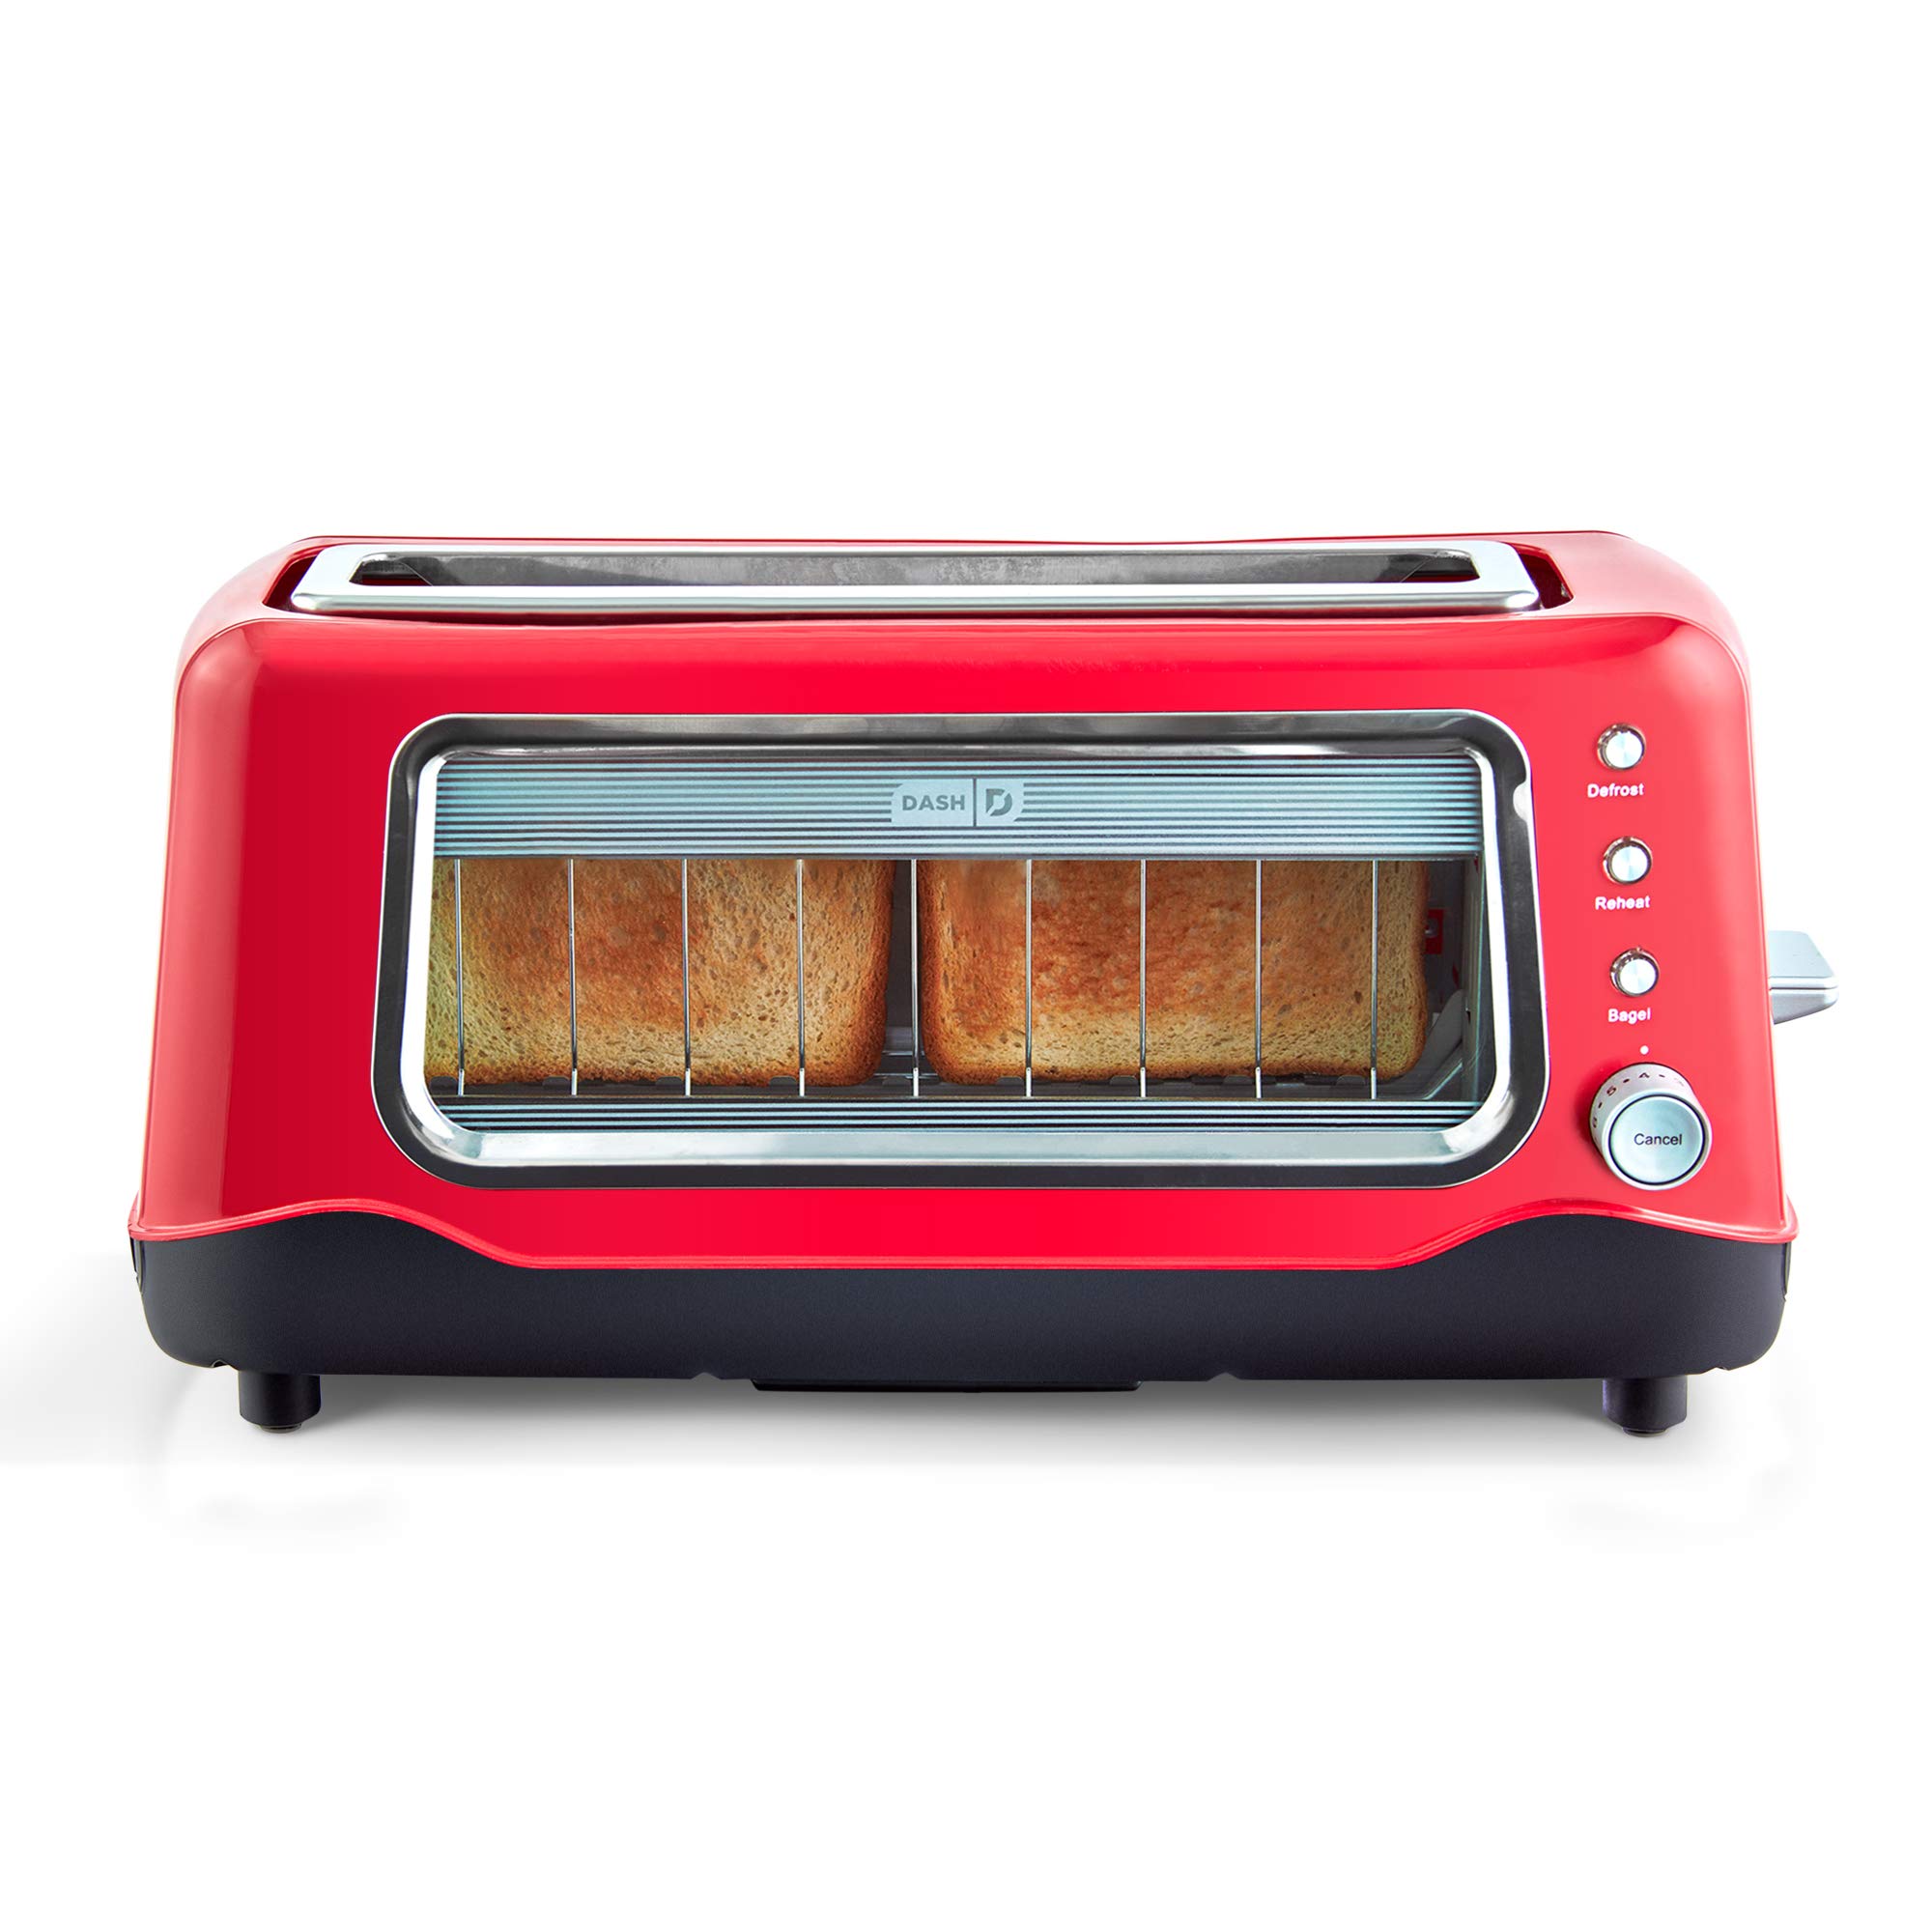 Dash Clear View Toaster: прозрачное окно для мониторинга процесса поджаривания